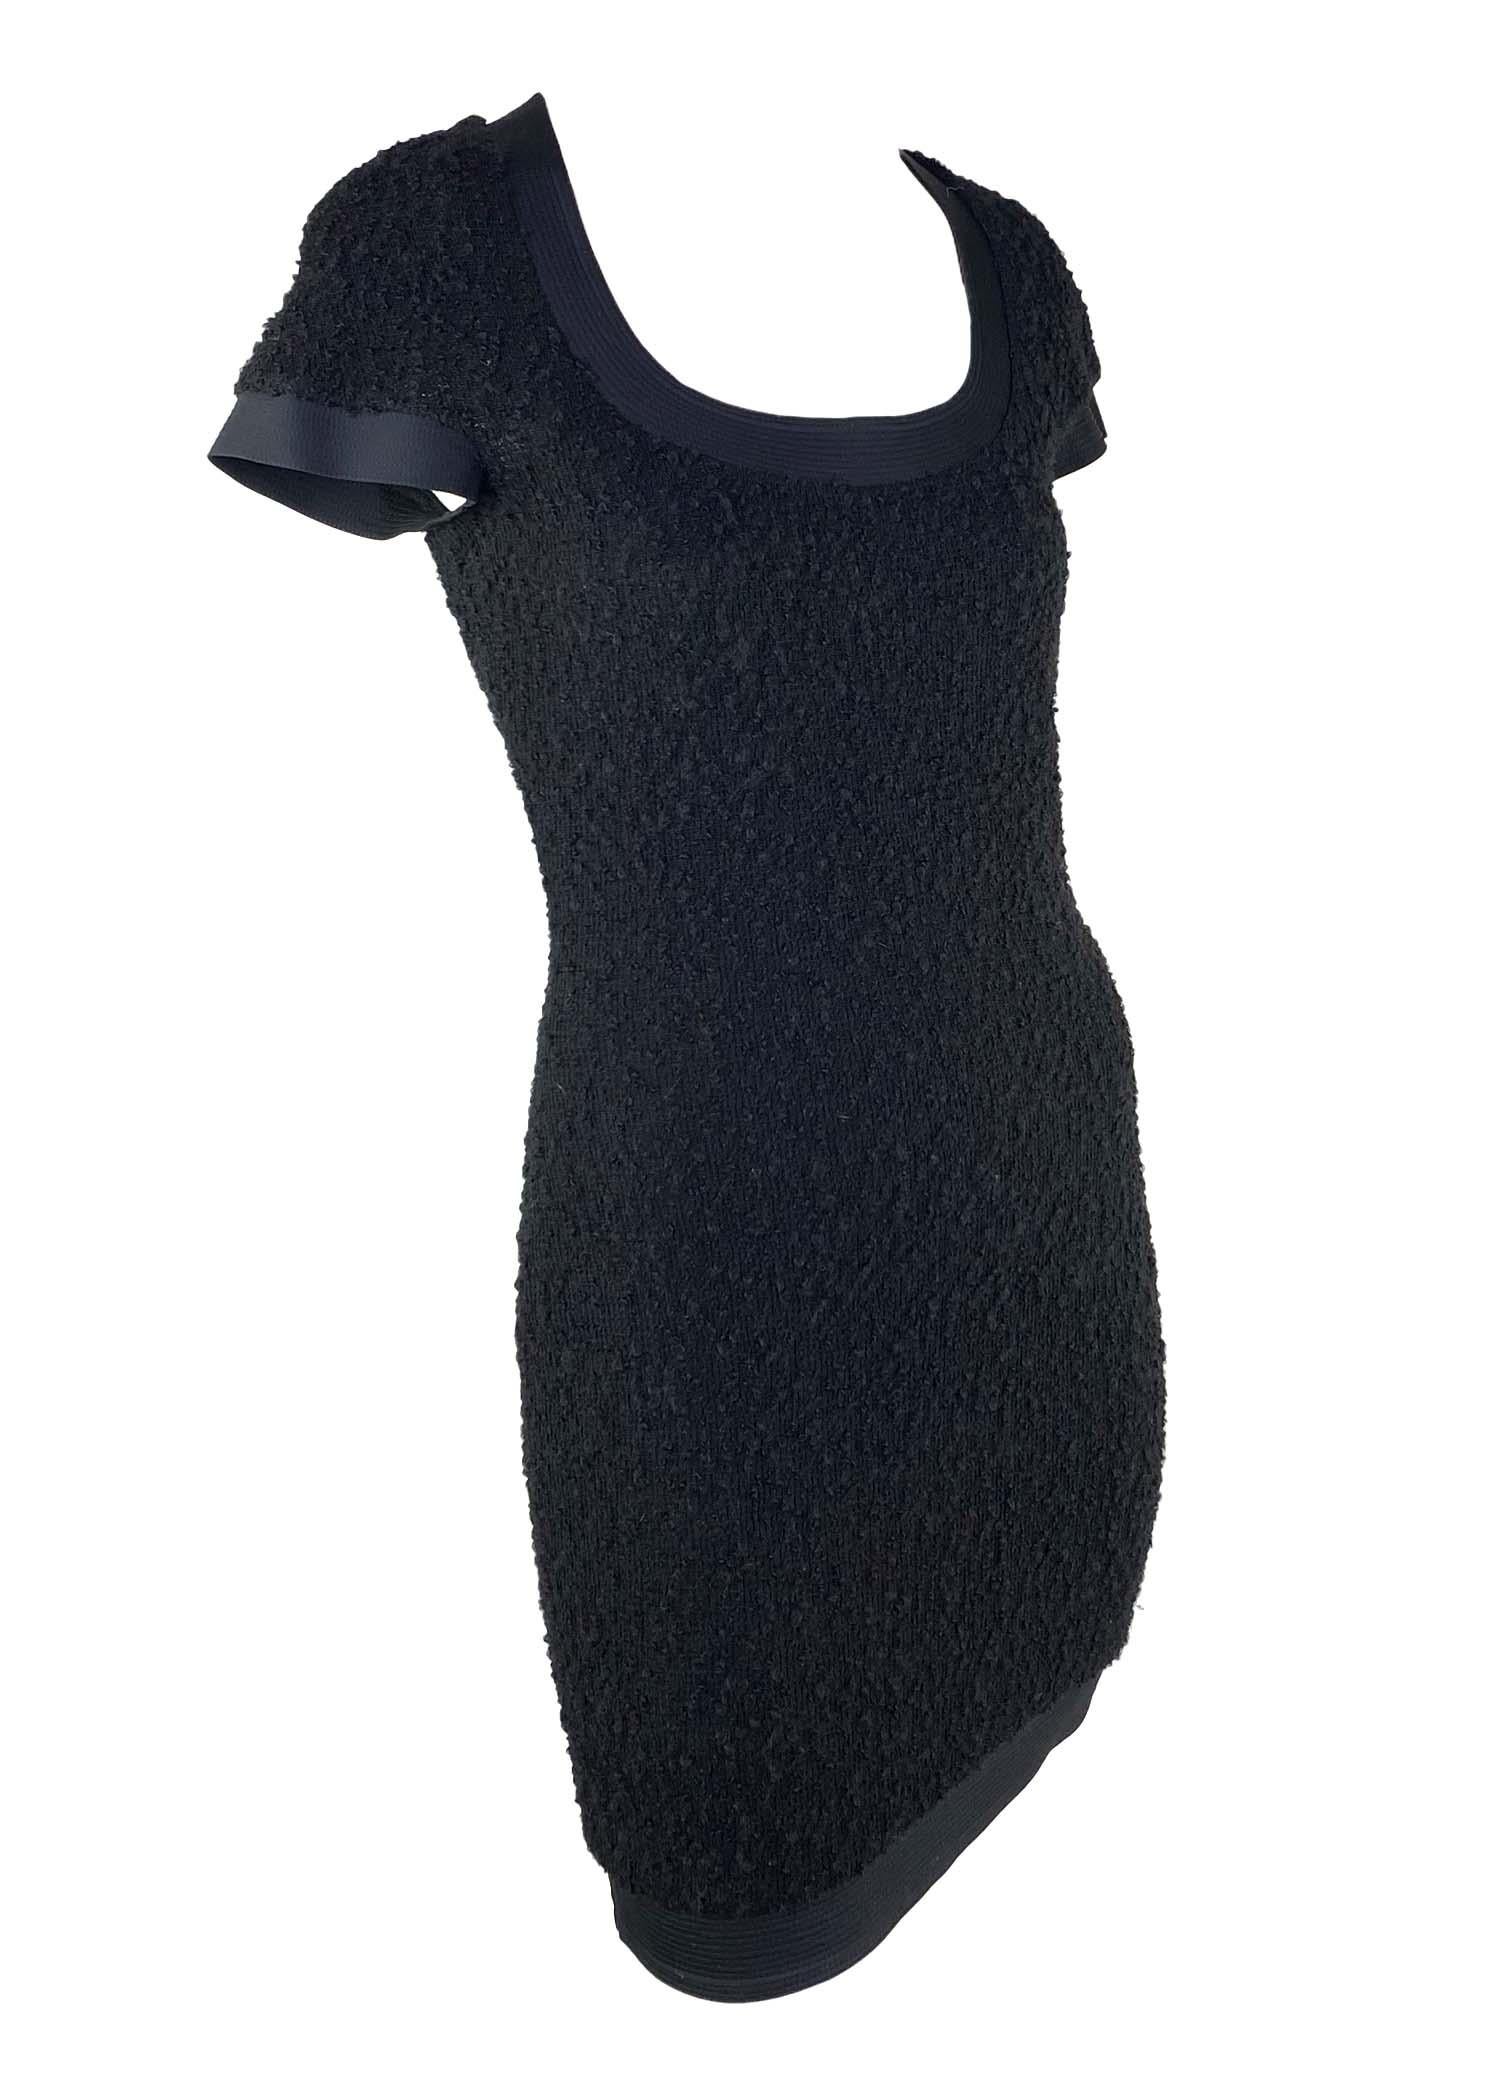 F/W 1991 Gianni Versace Couture Runway Black Stretch Bouclé Wool Mini Dress LBD For Sale 3